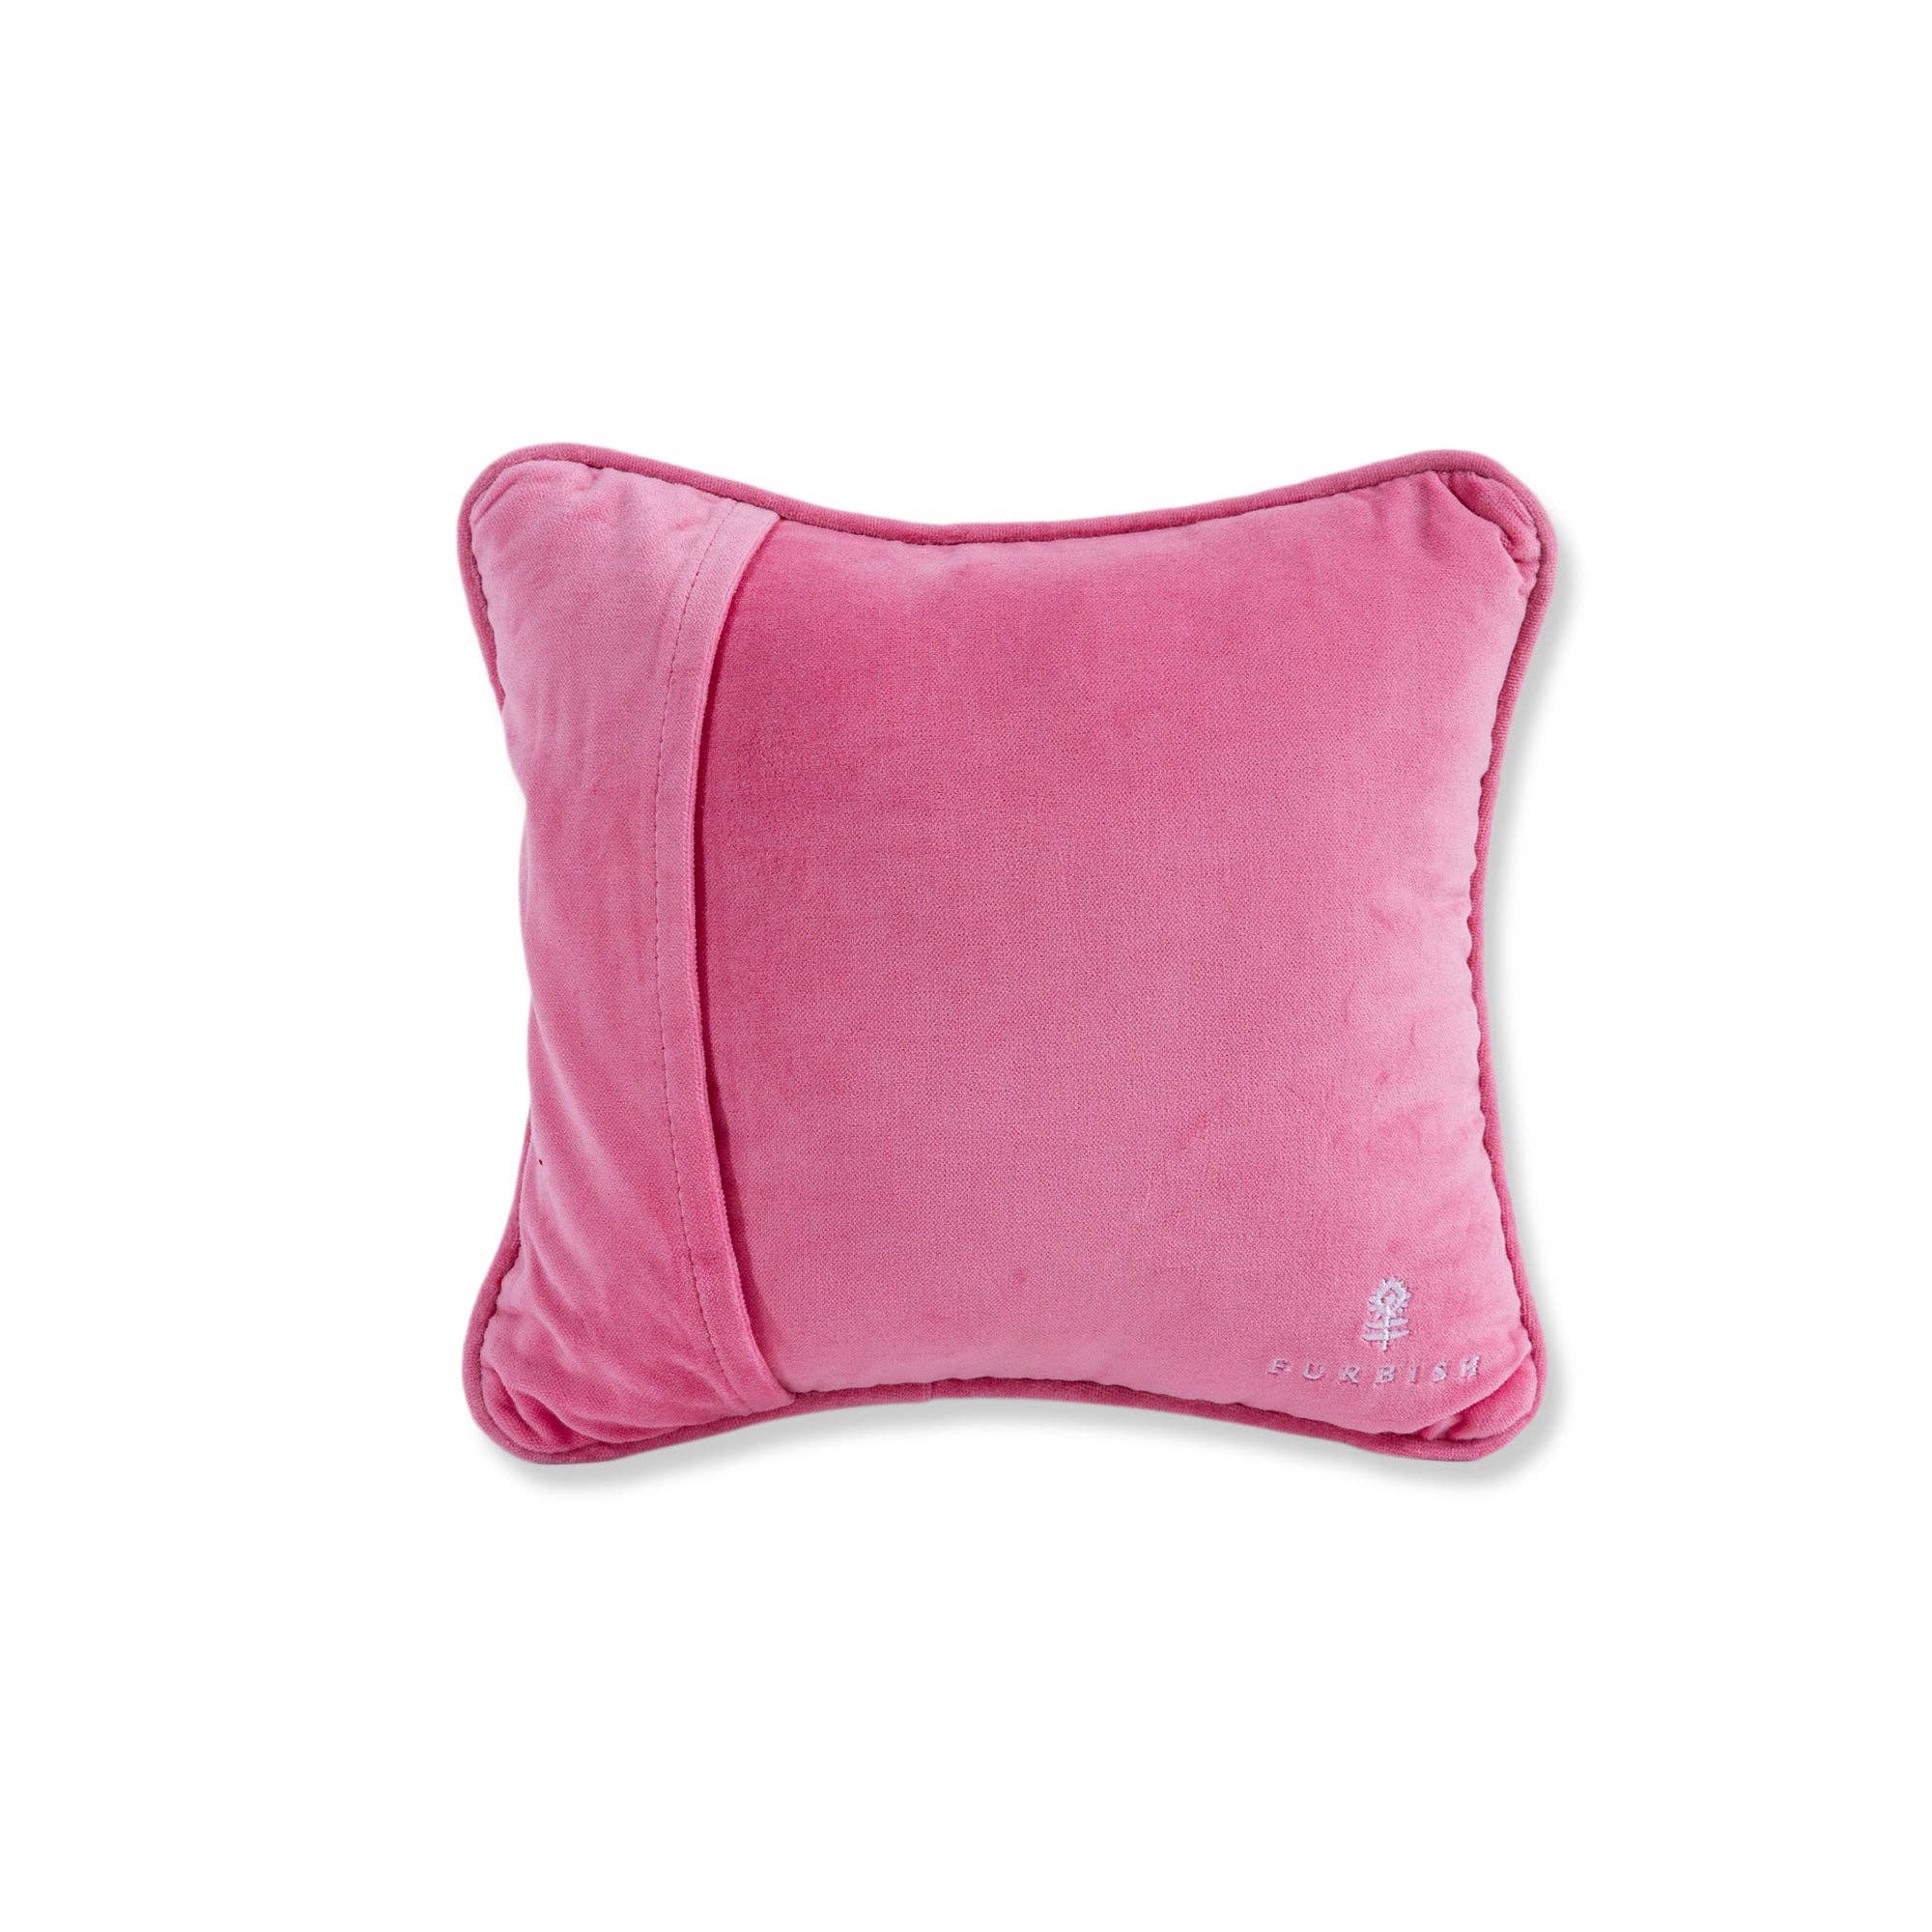 Trust Dolly Needlepoint Pillow